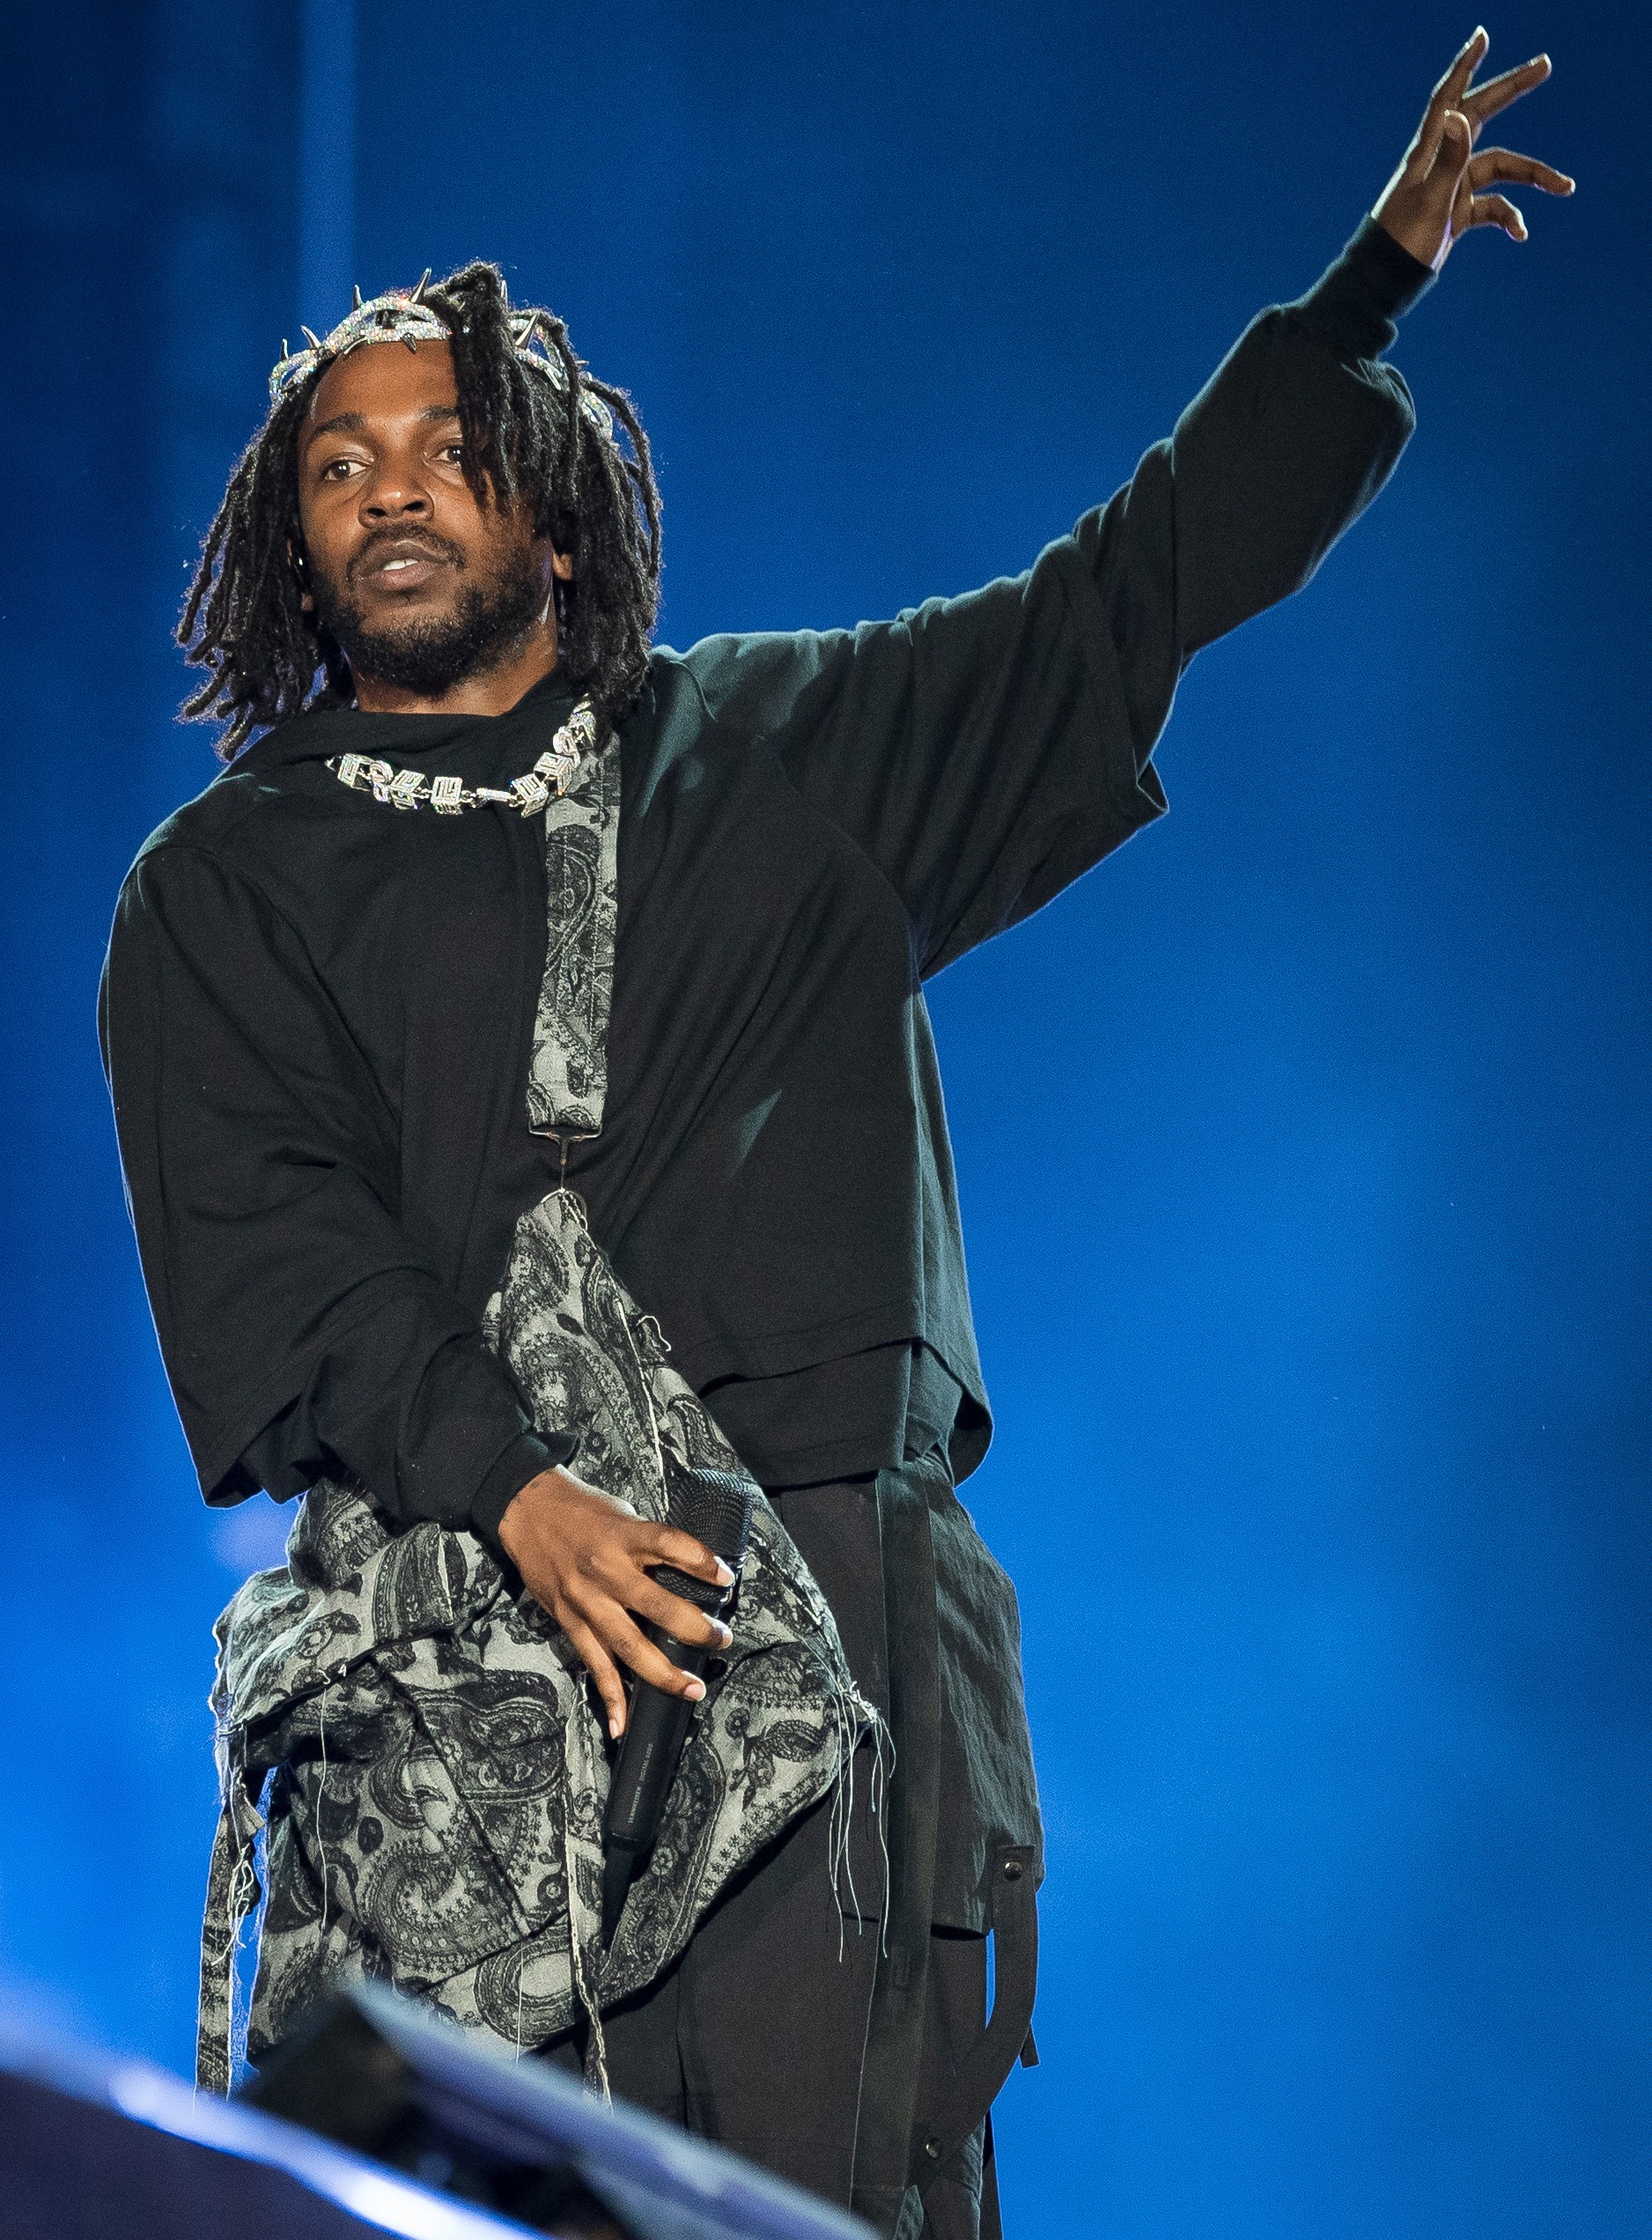 The LA rap superstar Kendrick Lamar headlined Glastonbury back in 2022